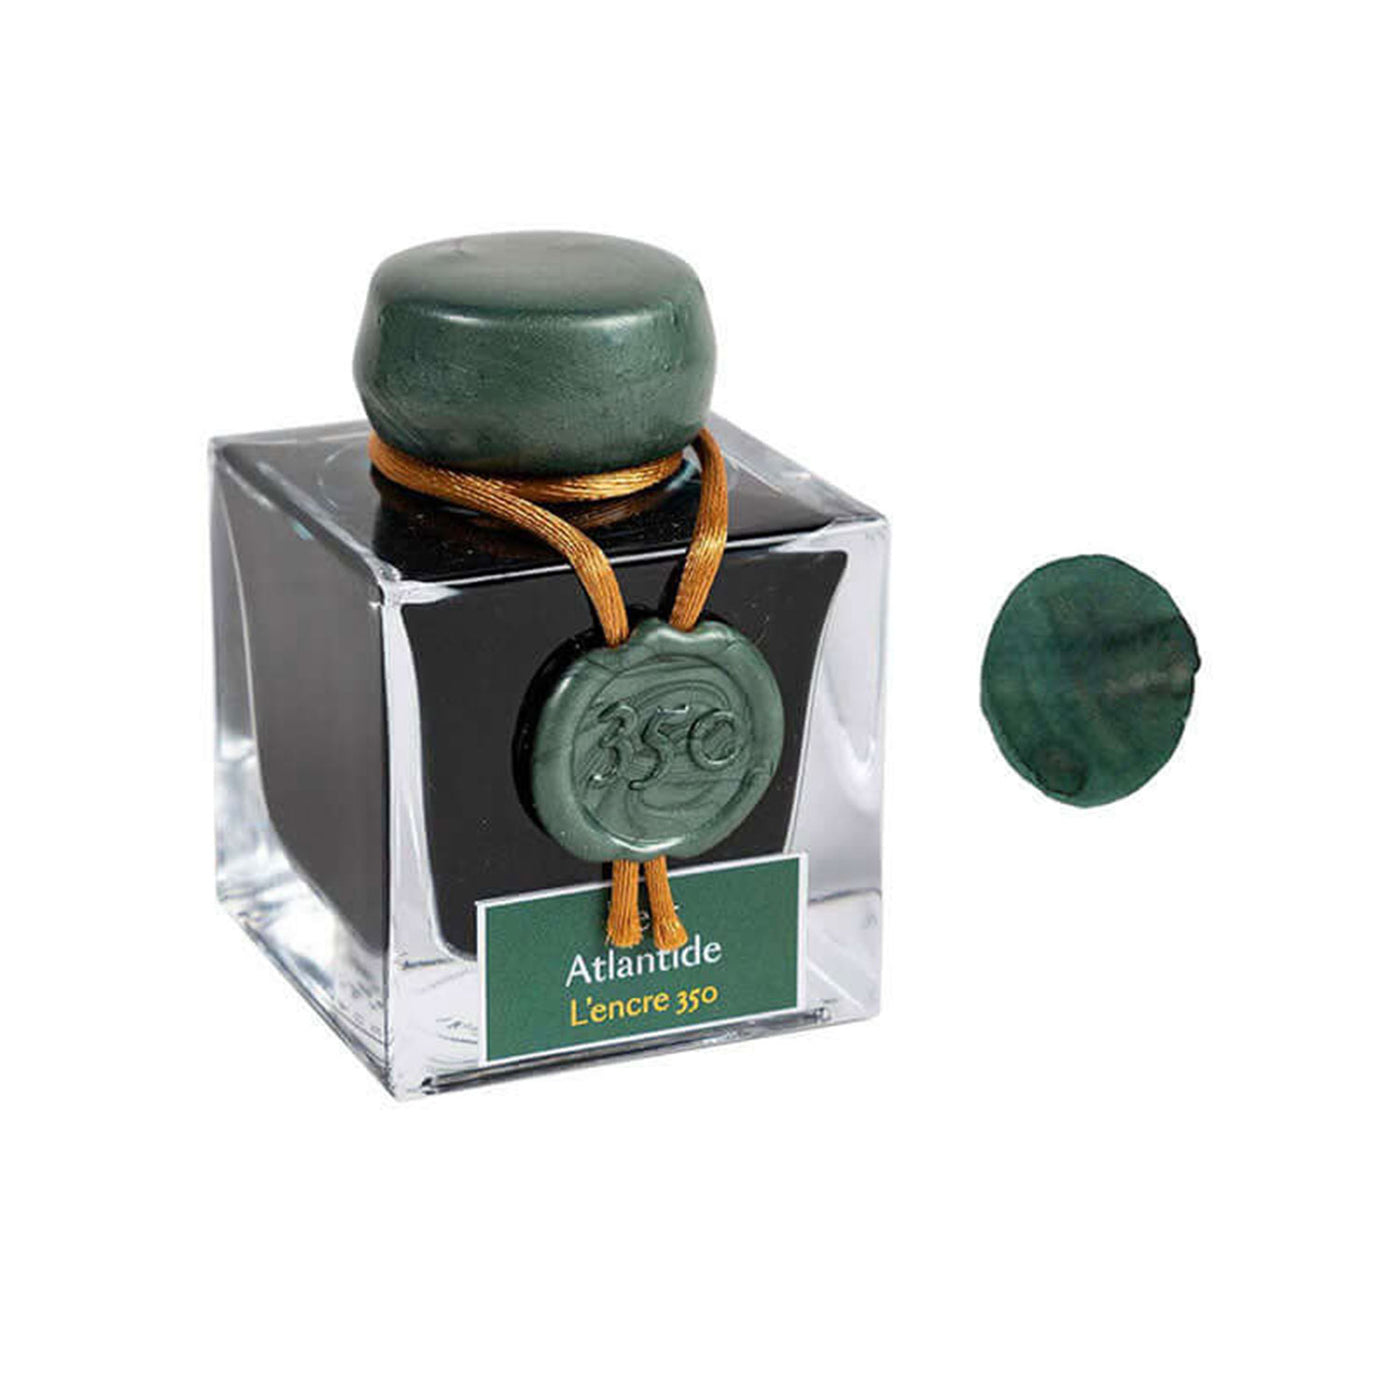 J Herbin L'Encre 350 Illuminee Ink Bottle Vert Atlantied (Green With Gold & Silver Shimmer) - 50ml